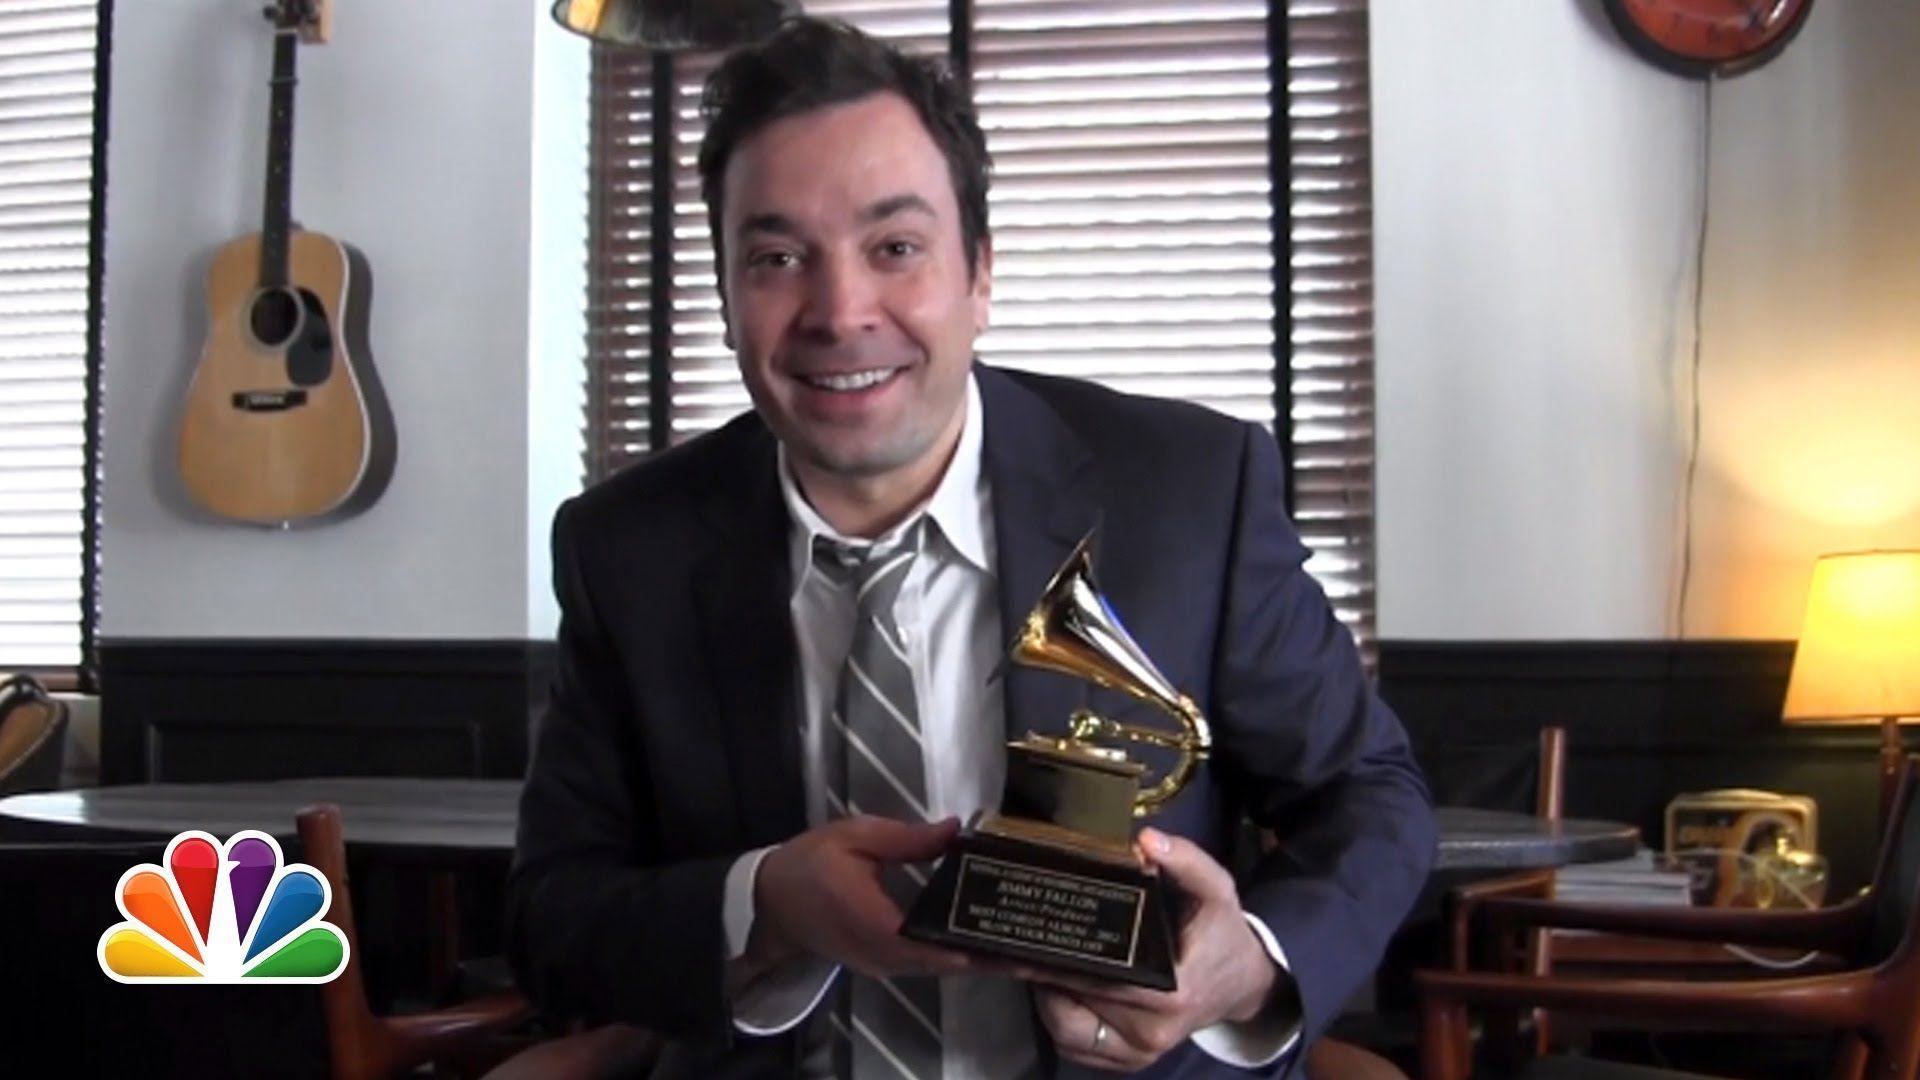 Jimmy's Grammy Award Thank You Late Night with Jimmy Fallon